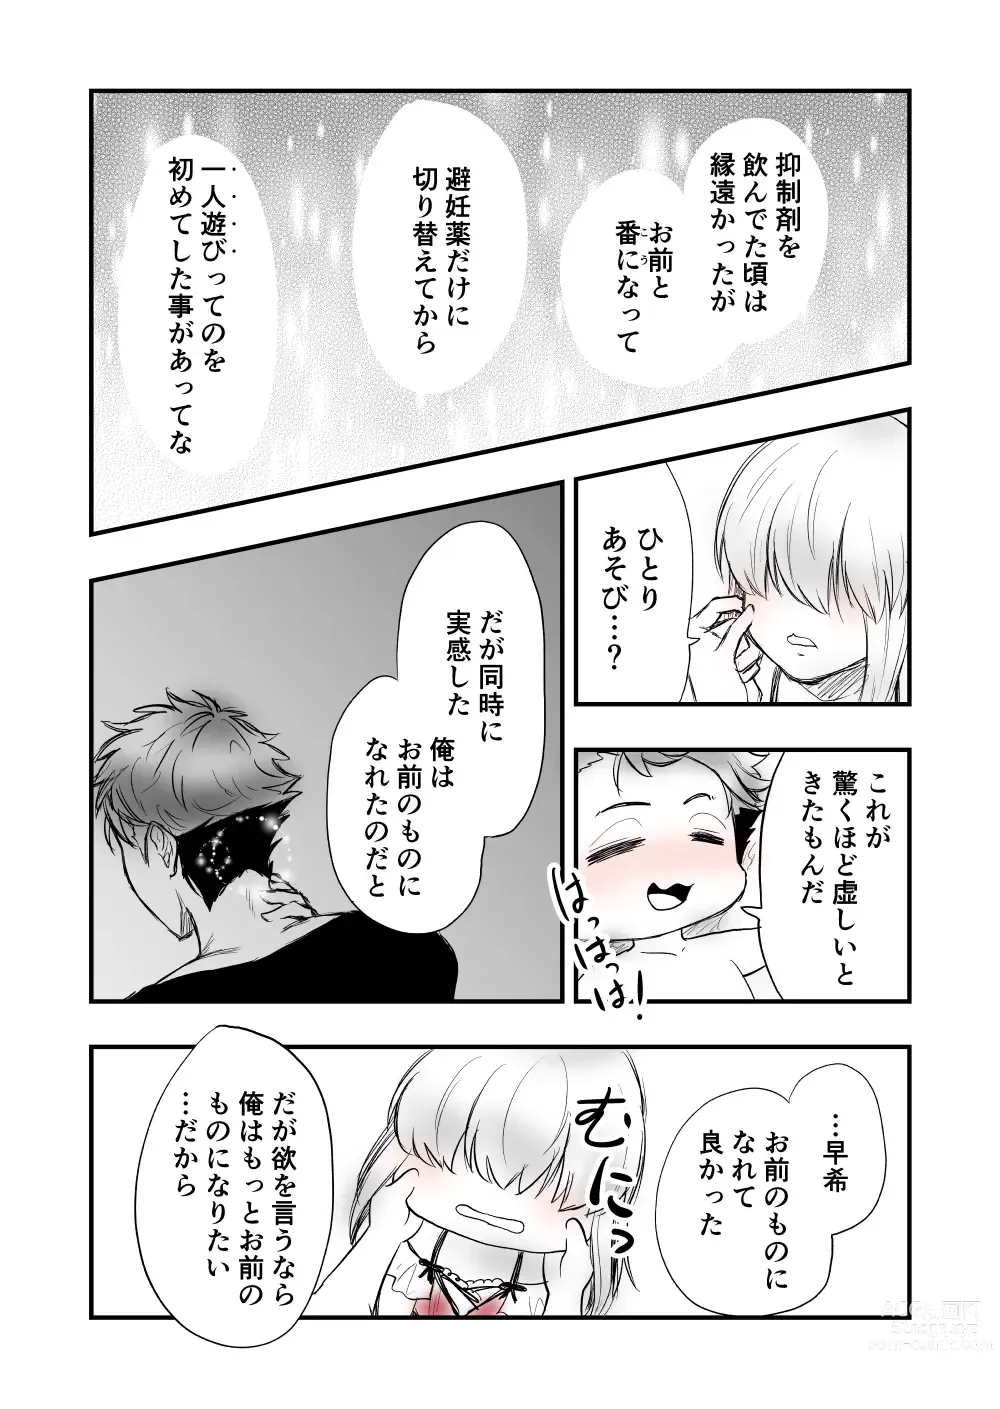 Page 43 of doujinshi 4